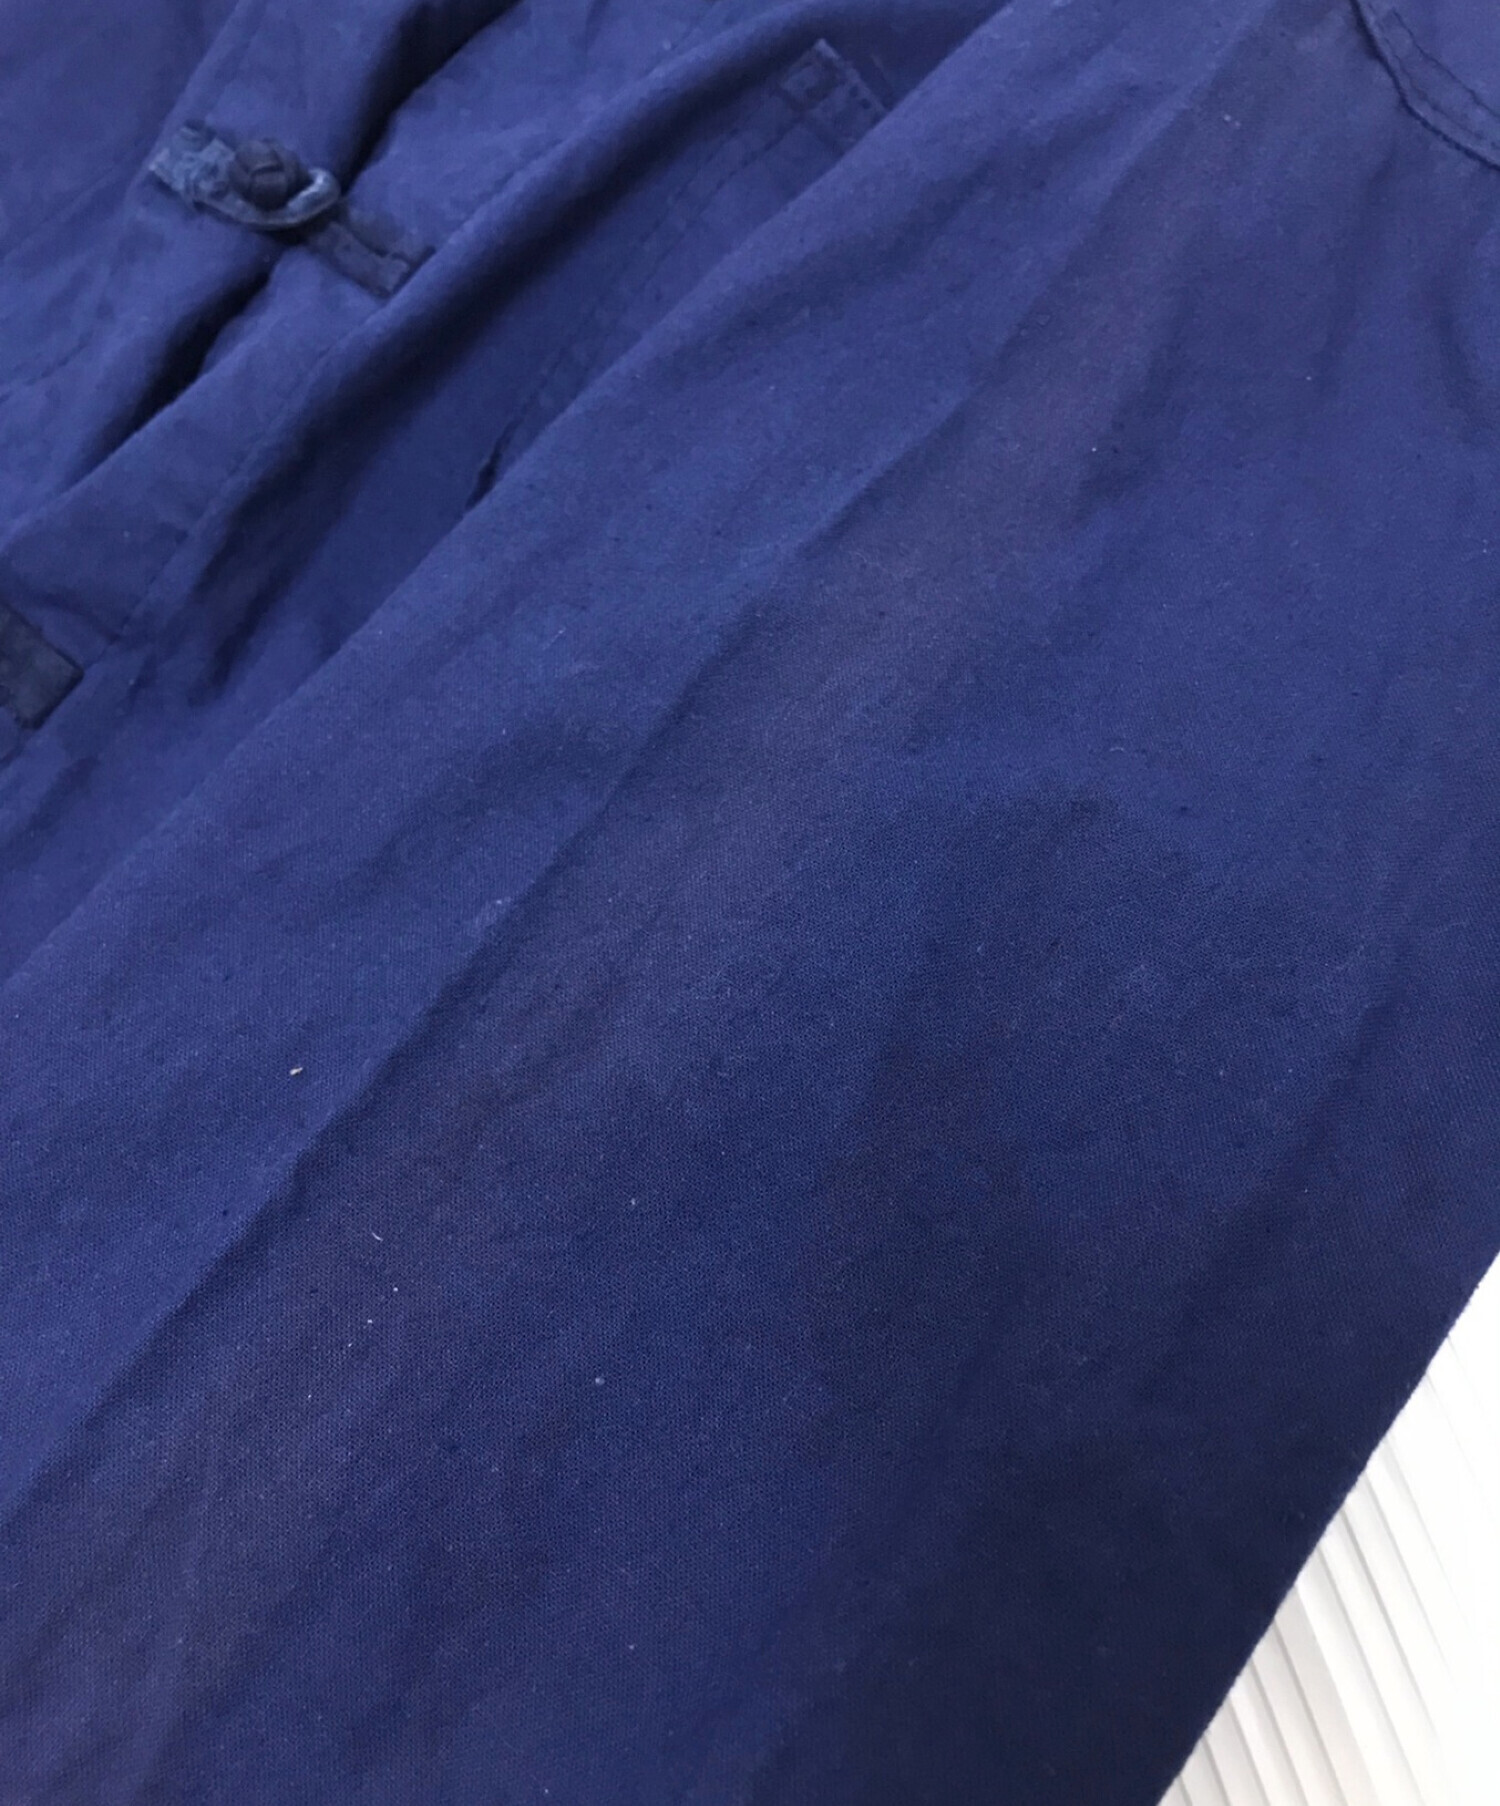 L'Anti cher (ランチシェール) フレンチワークチャイナジャケット ブルー サイズ:64